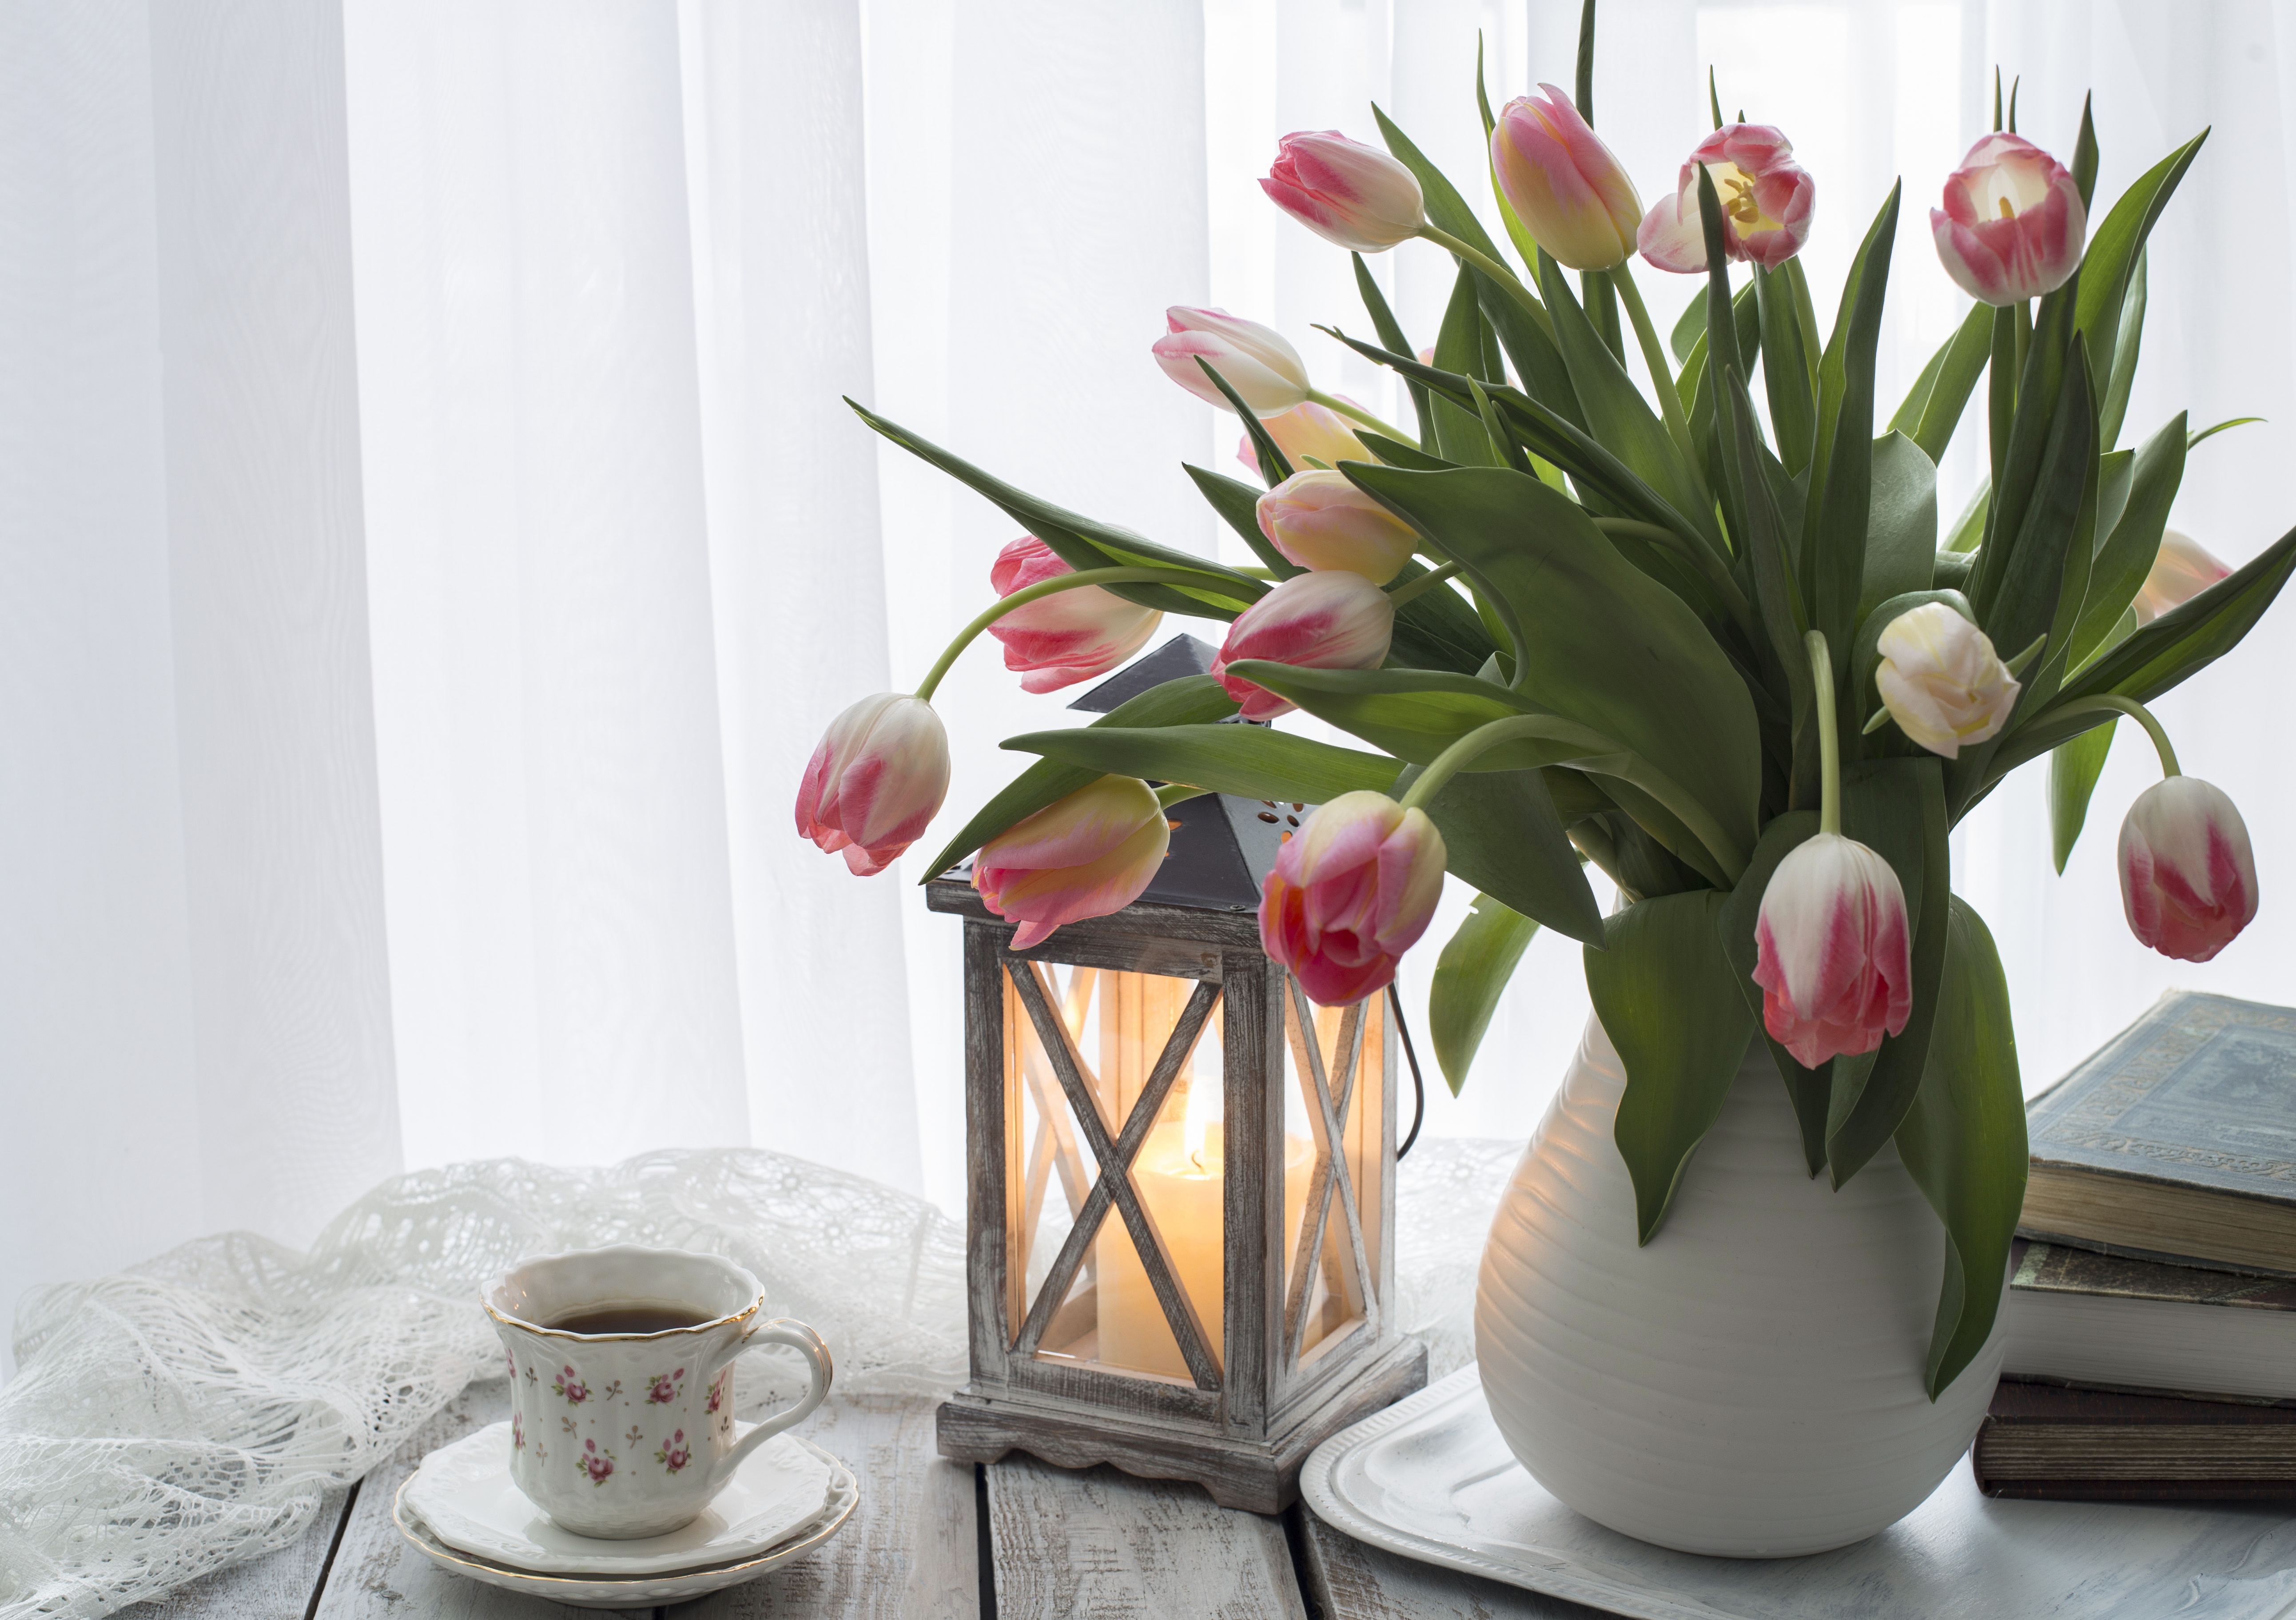 Фото тюльпаны в вазе на столе. Тюльпаны в вазе. Дульбаны в ваззе. Букет тюльпанов в вазе. Вазы для тюльпанов.